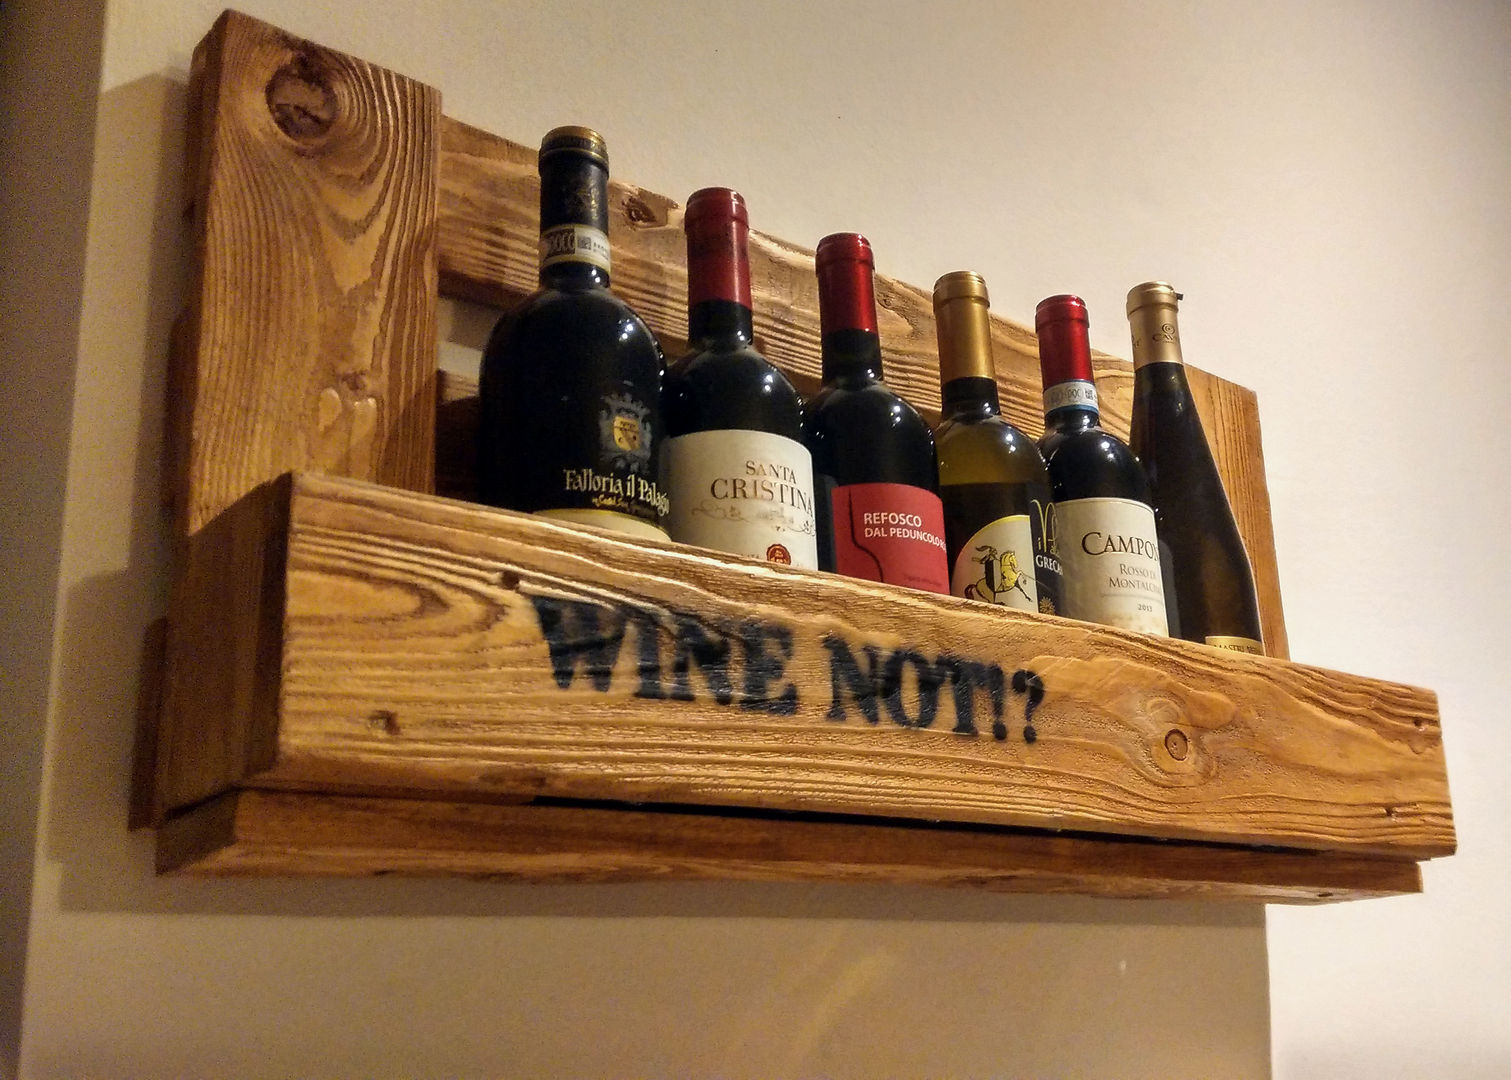 Portabottiglie WINE NOT!?, IDEA - Ivan de Angelis IDEA - Ivan de Angelis ห้องเก็บไวน์ ไม้จริง Multicolored ที่เก็บไวน์